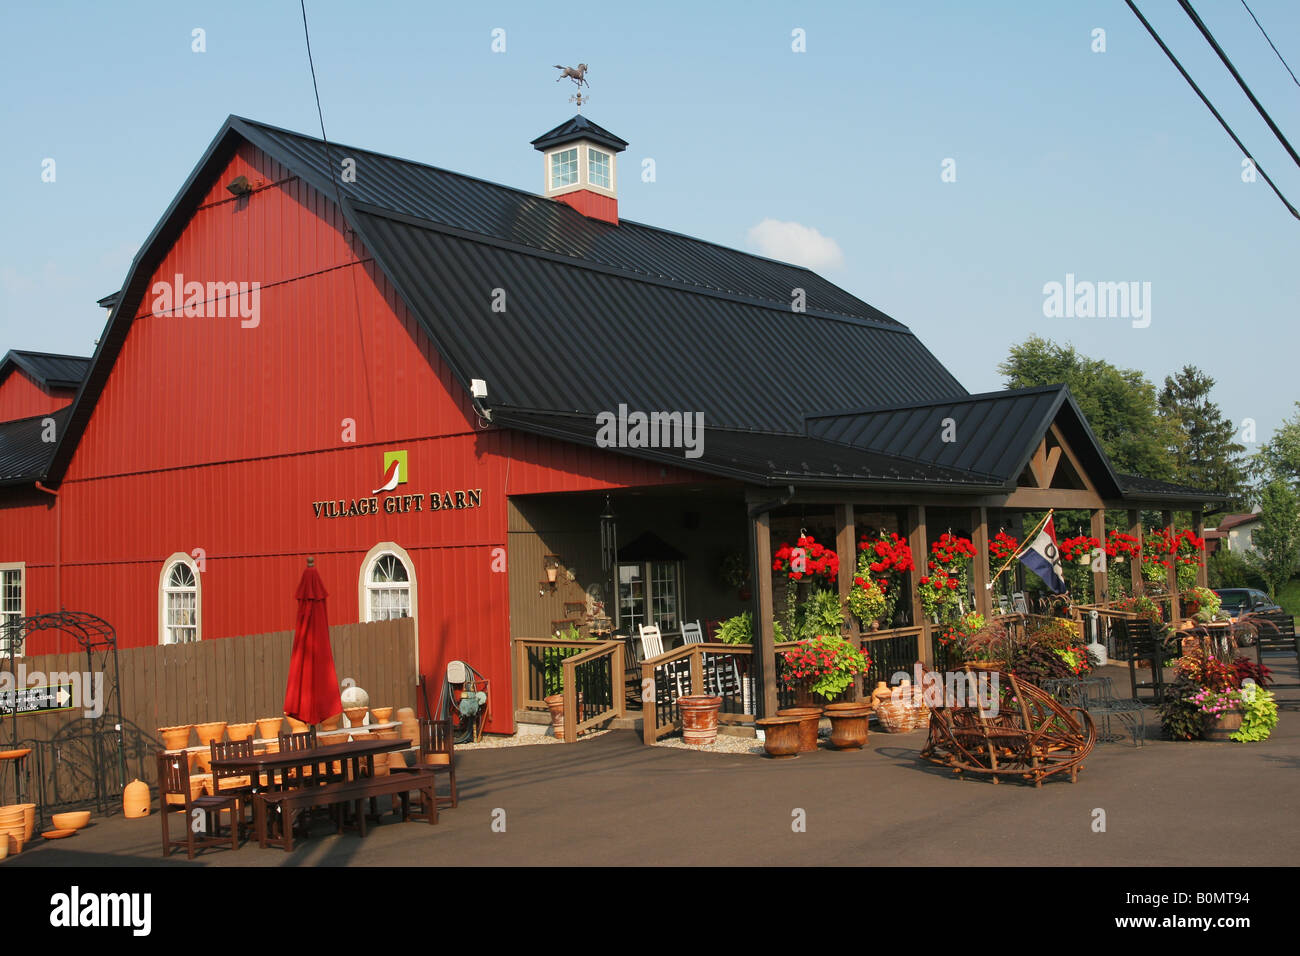 village gift barn amish country at berlin ohio B0MT94